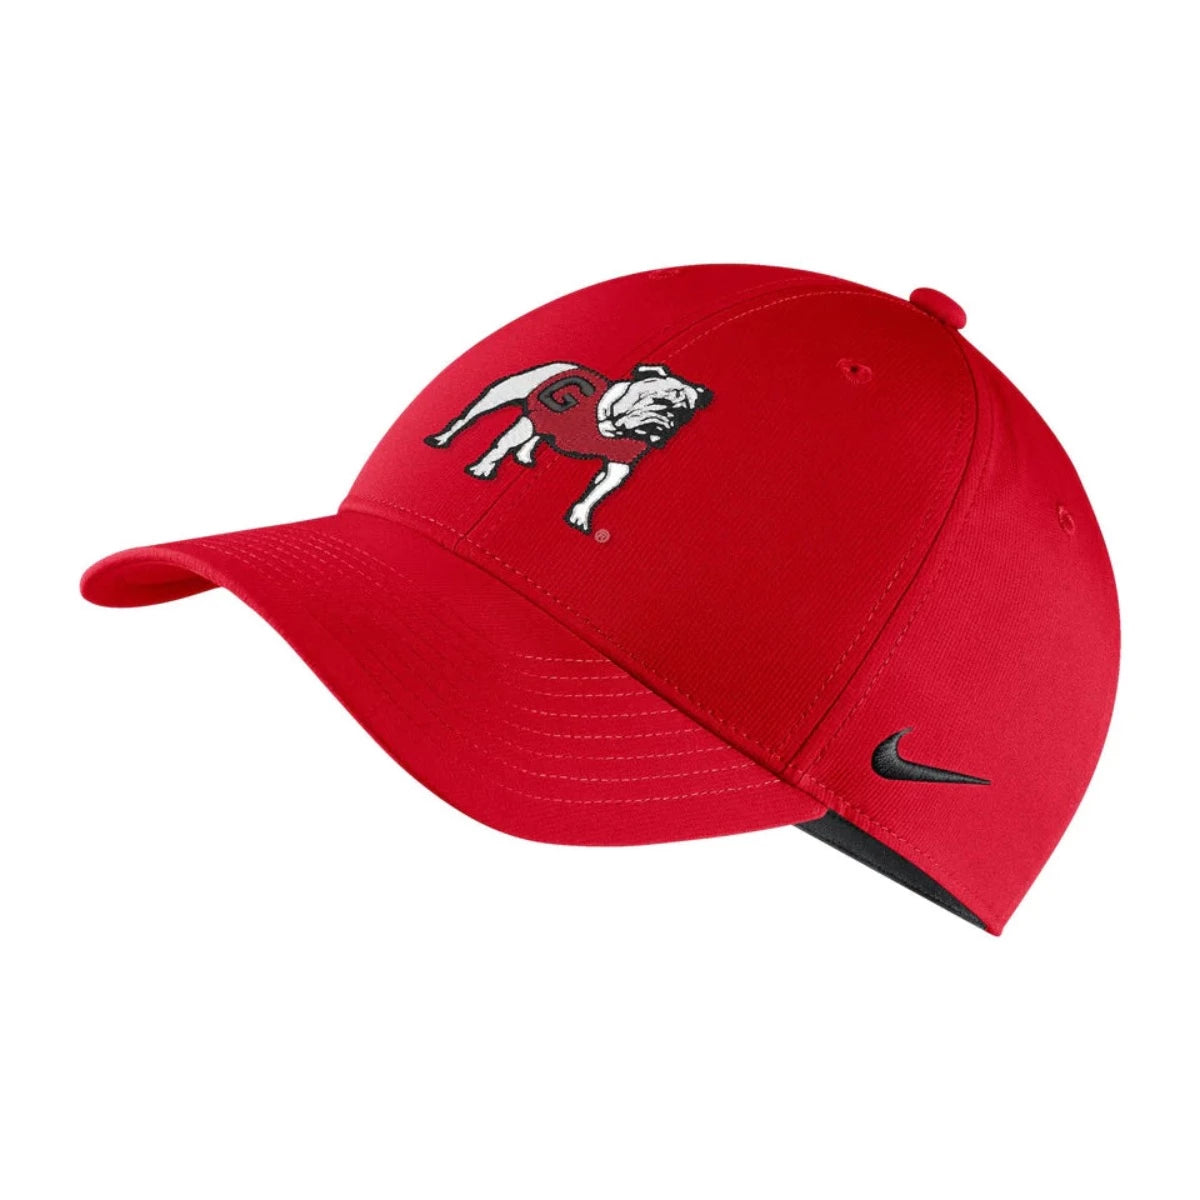 UGA Nike Red Legacy91 Hat with Standing Bulldog